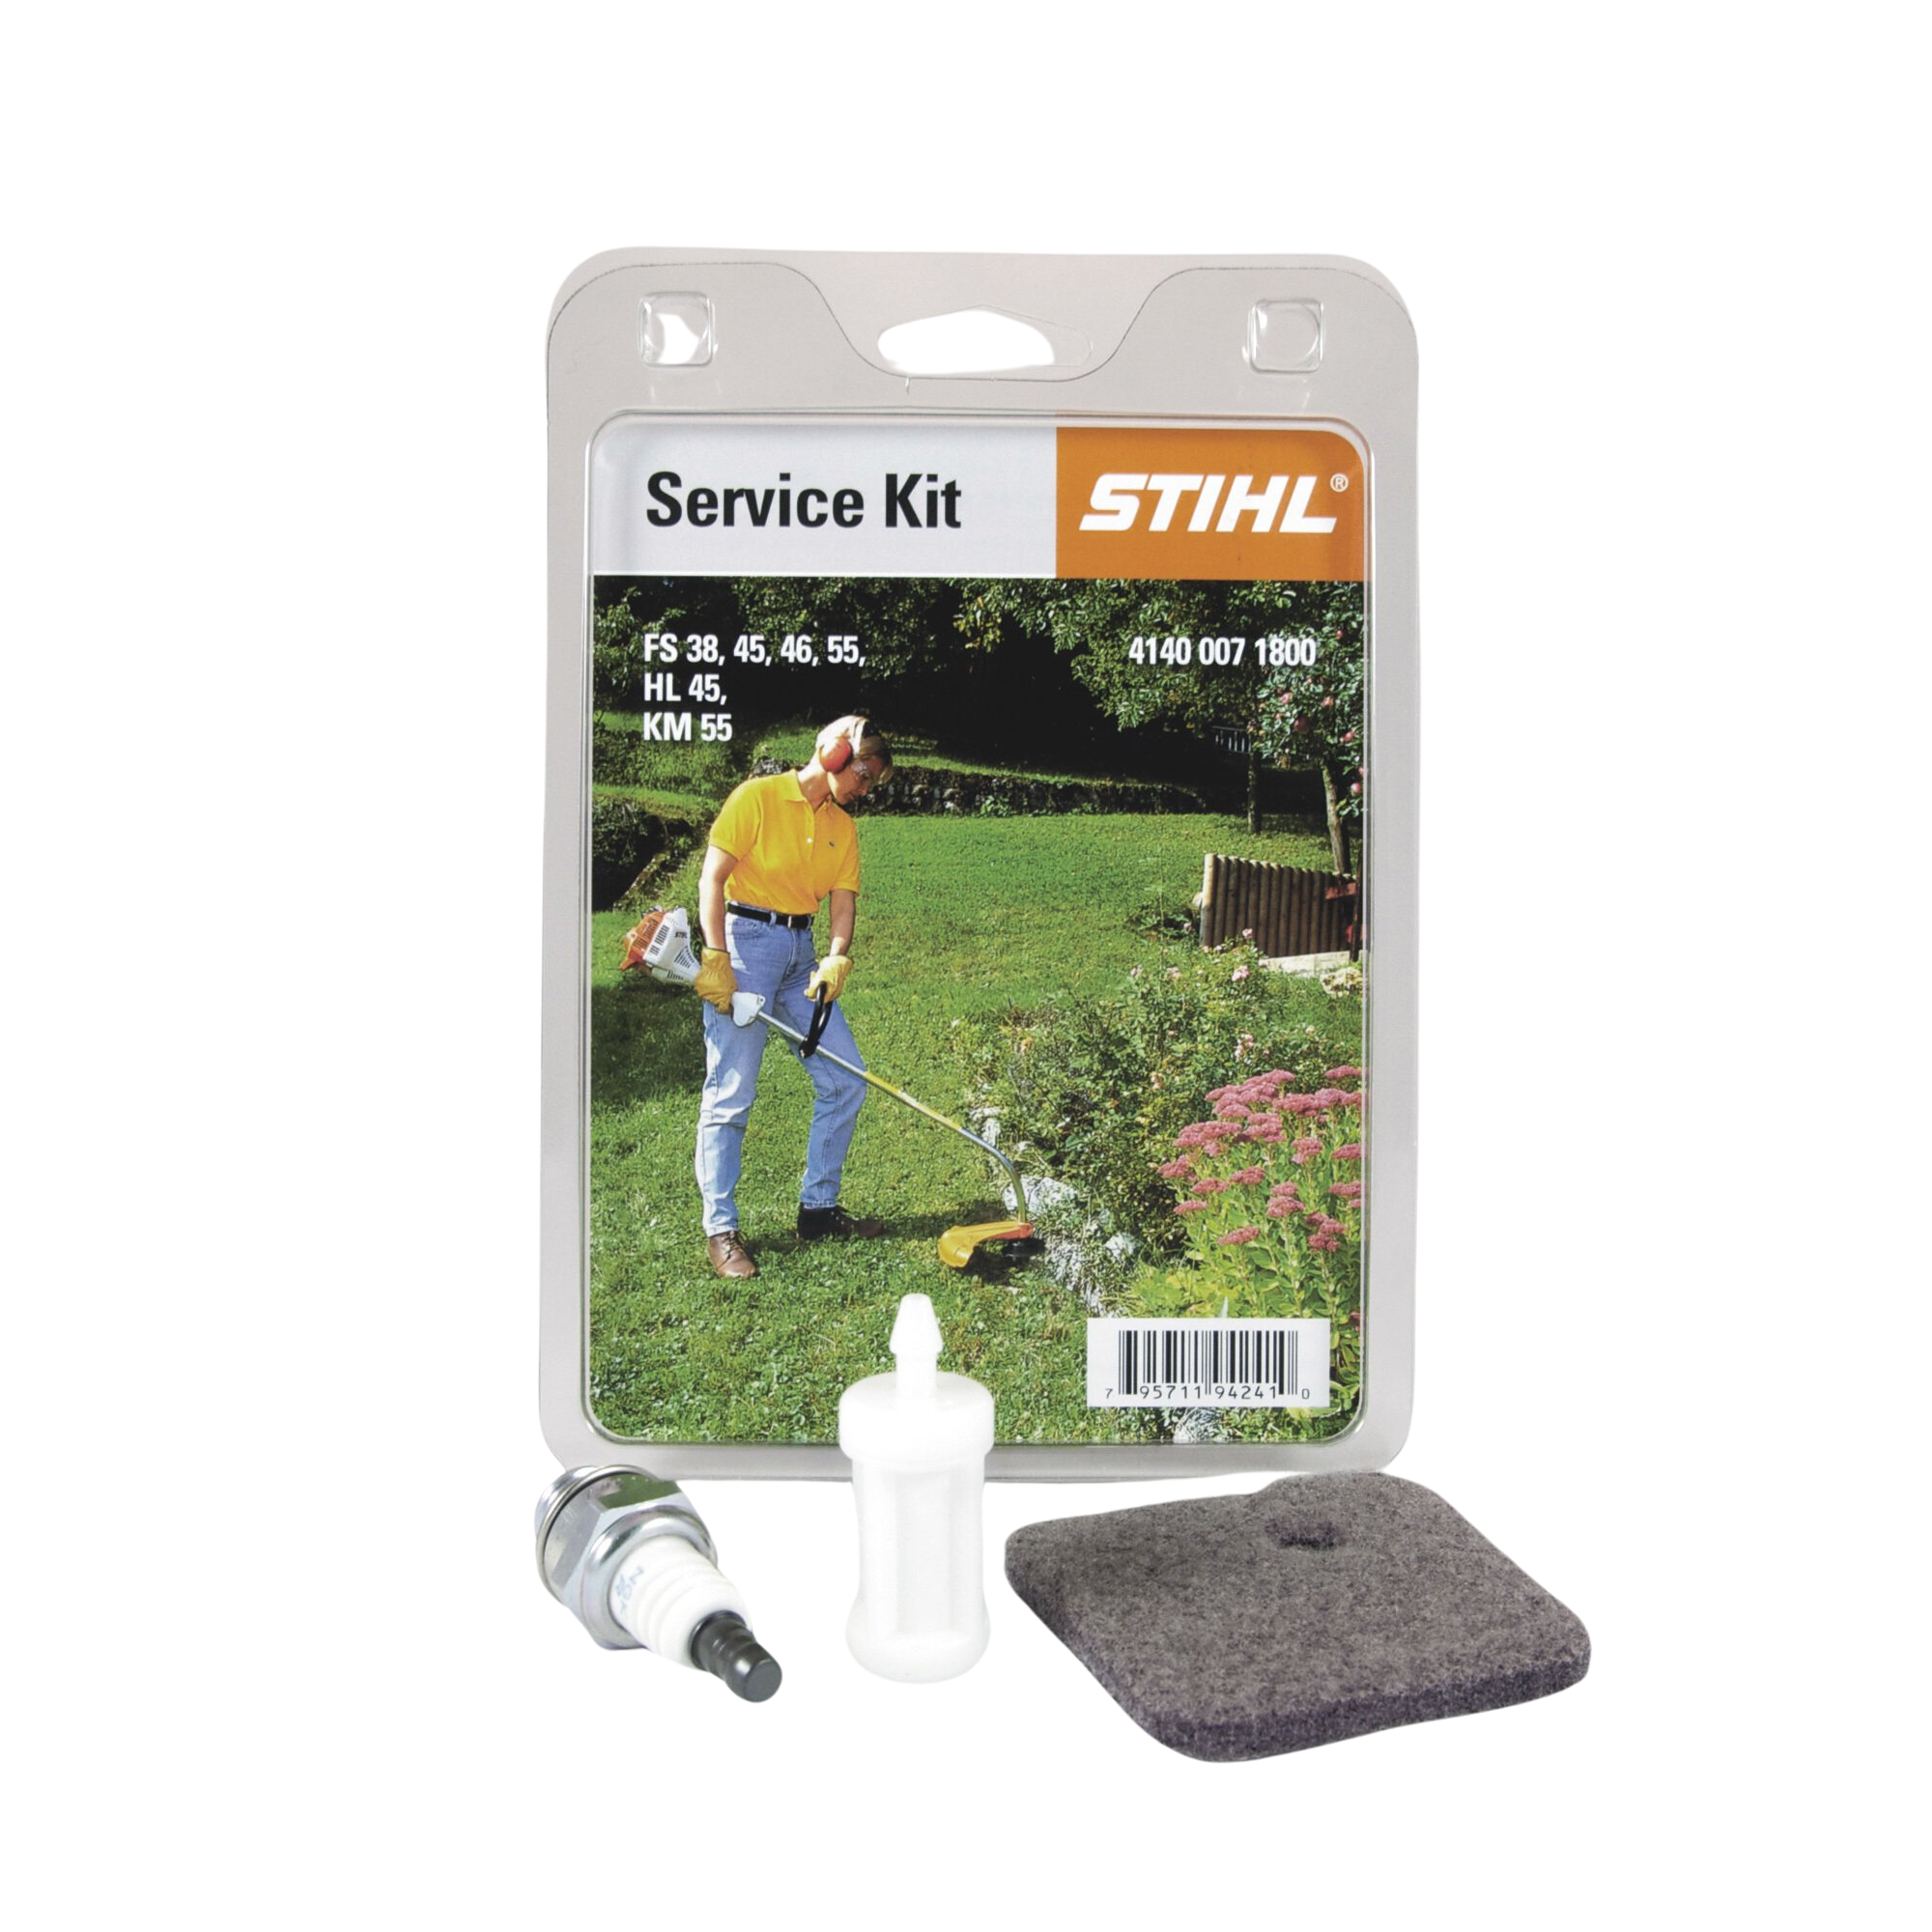 Stihl Trimmer Service Kit 4140 series | 4140 007 1800